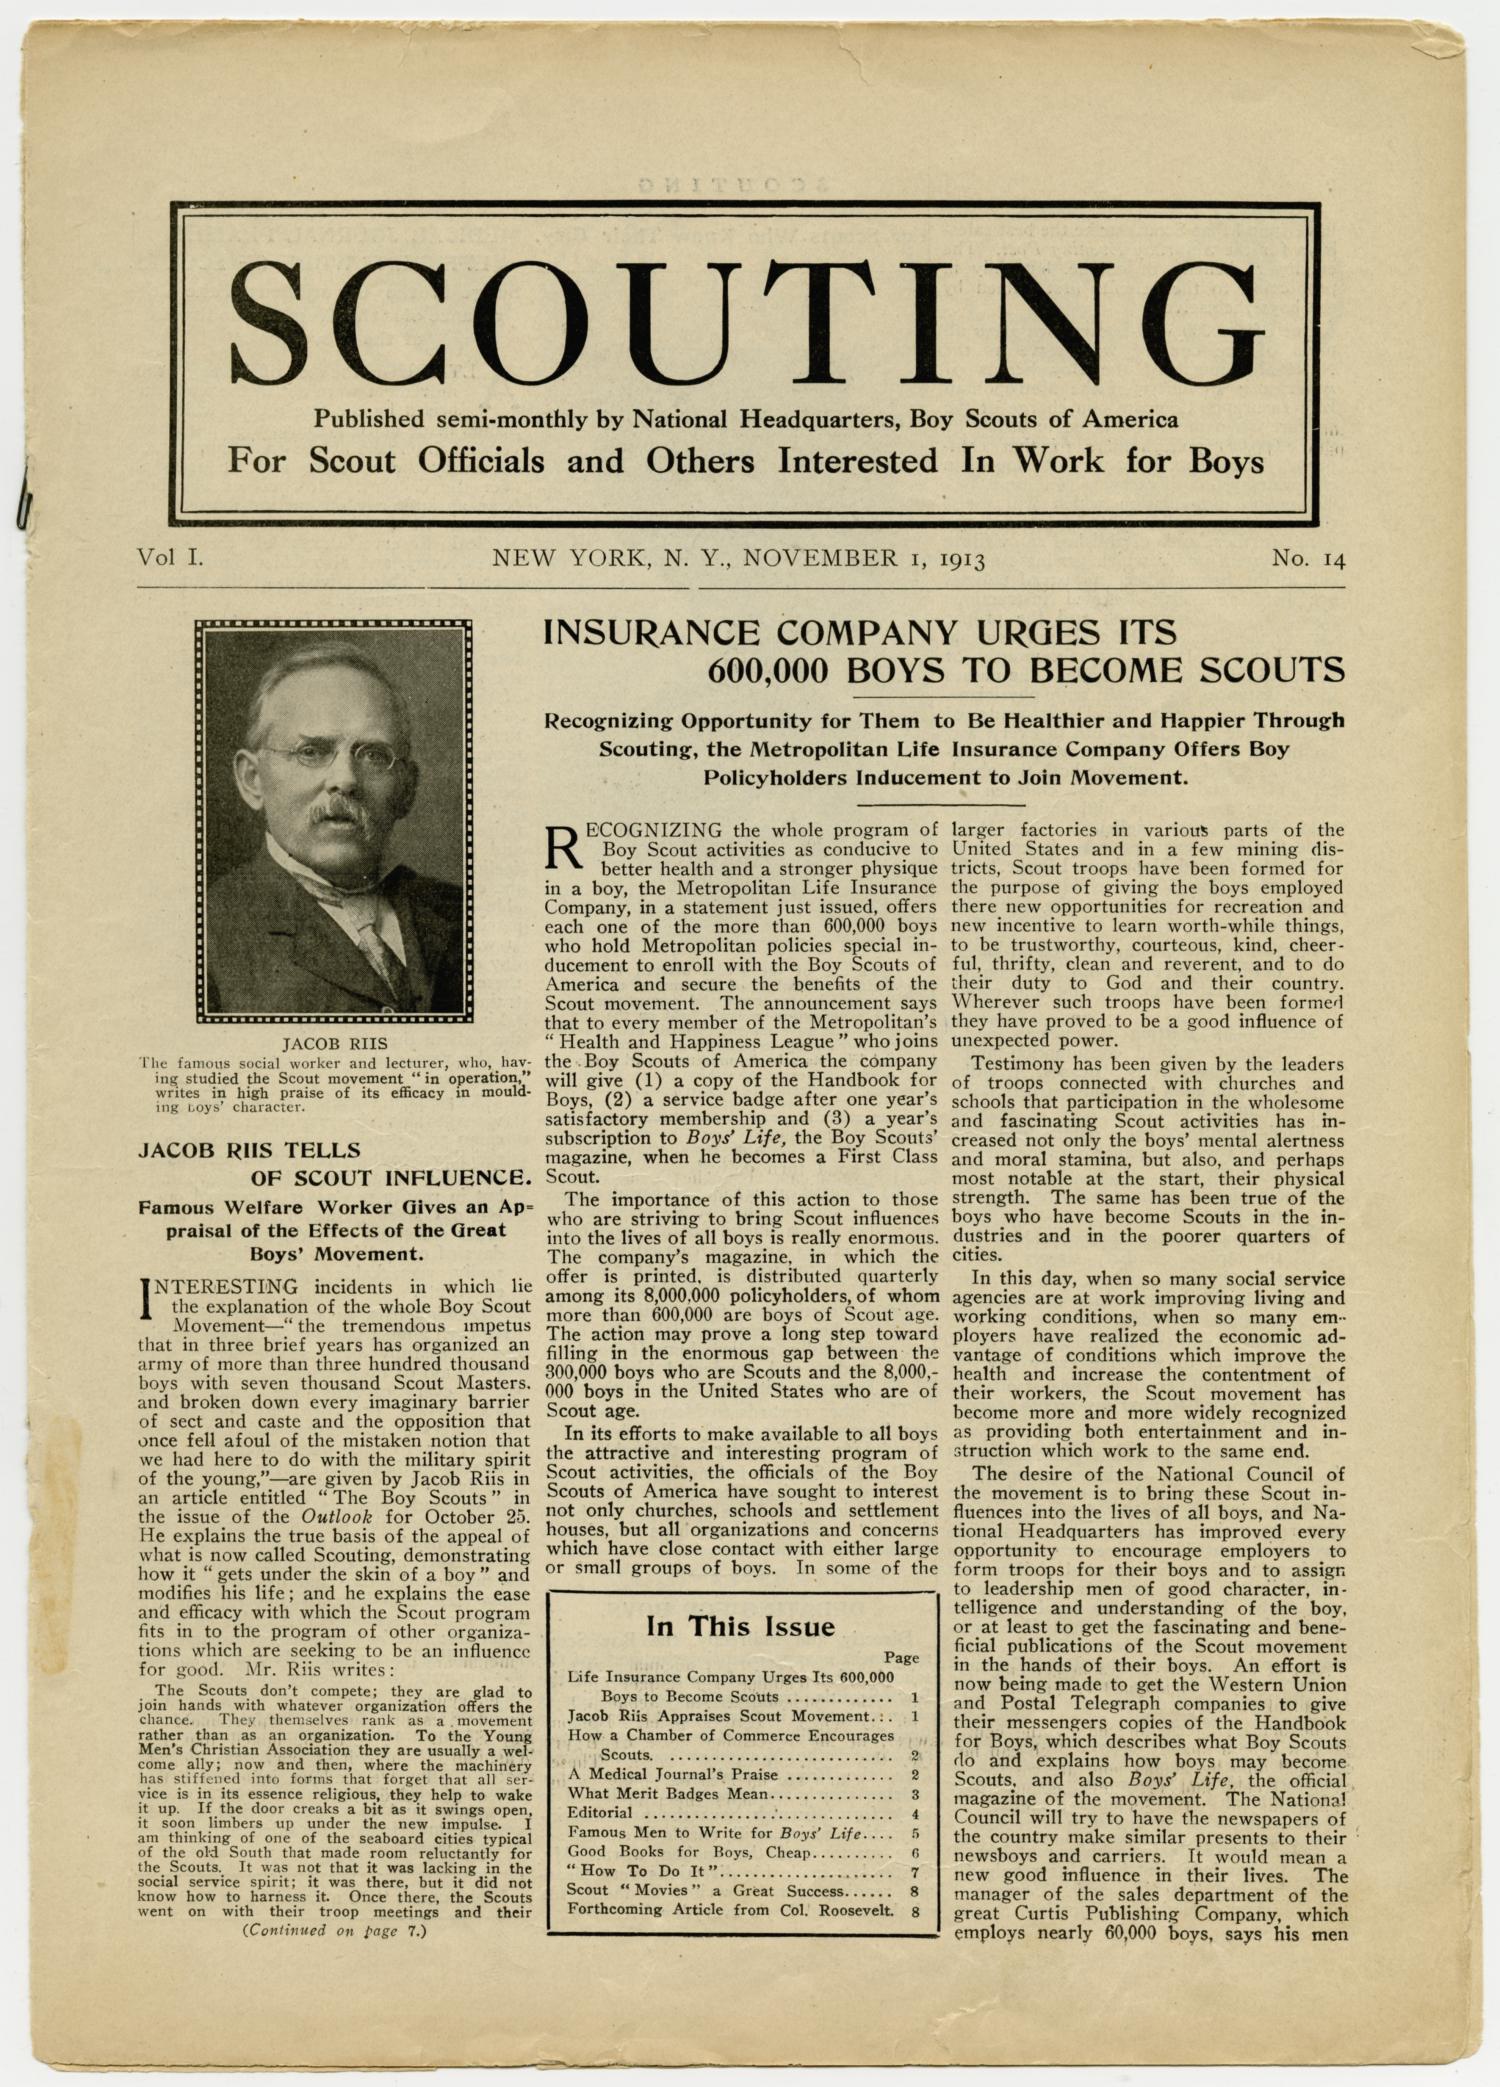 Scouting, Volume 1, Number 14, November 1, 1913
                                                
                                                    1
                                                